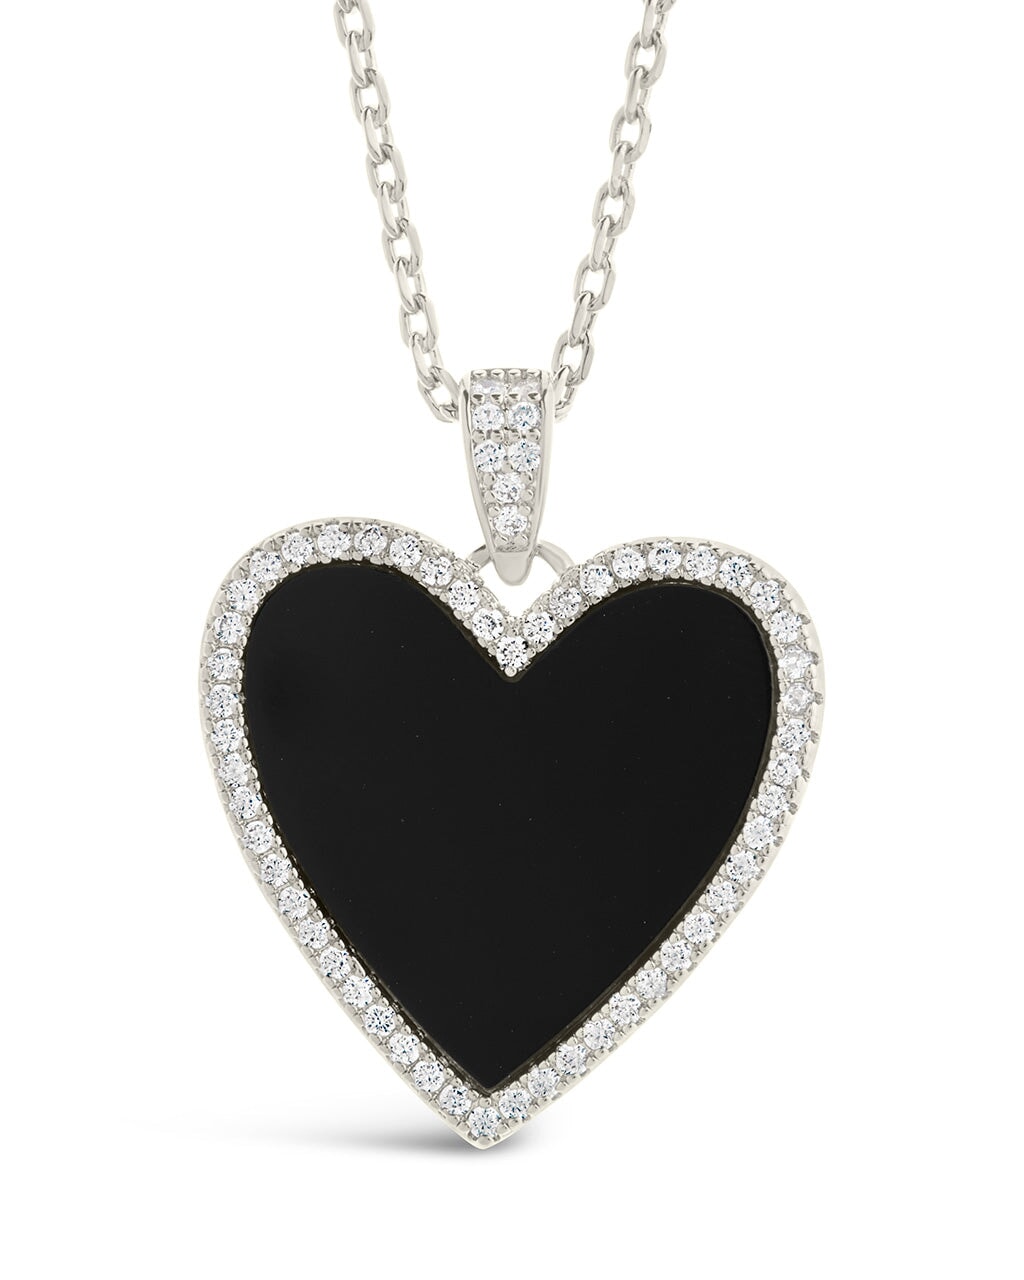 Tara Heart Pendant Necklace Sterling Forever Silver 